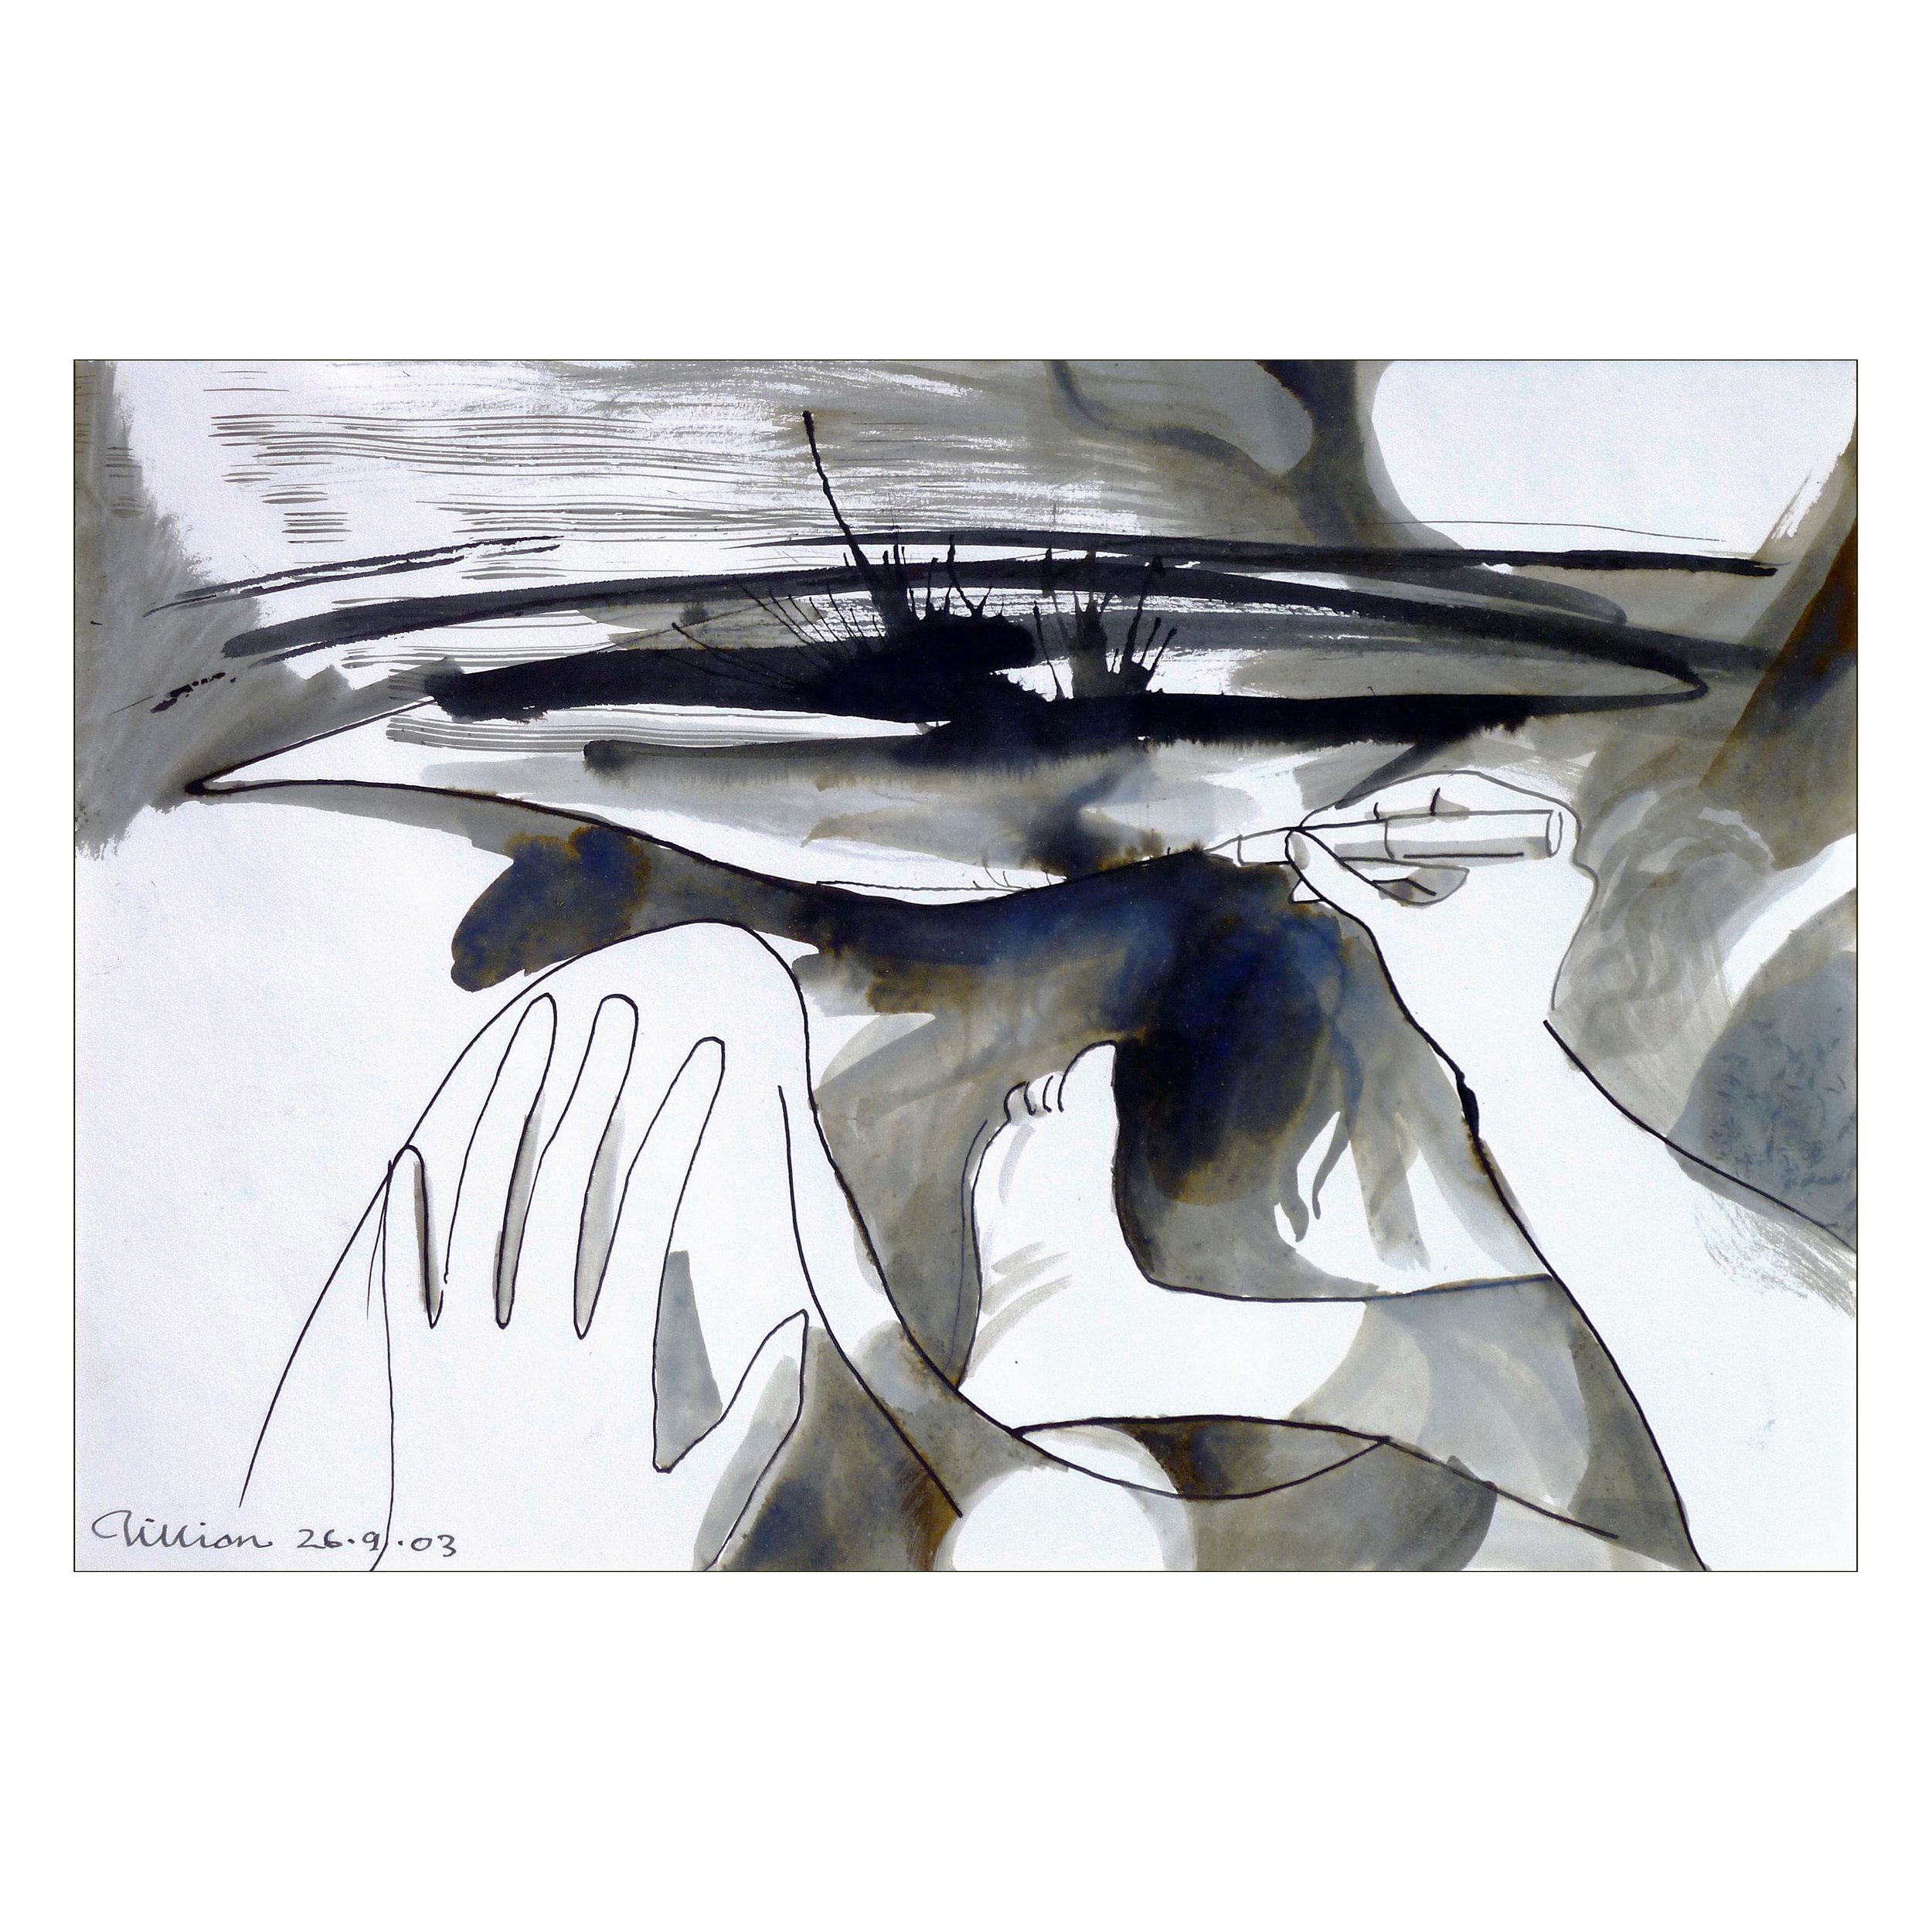 'ARTIST DRAWING SEA'  26.9'03